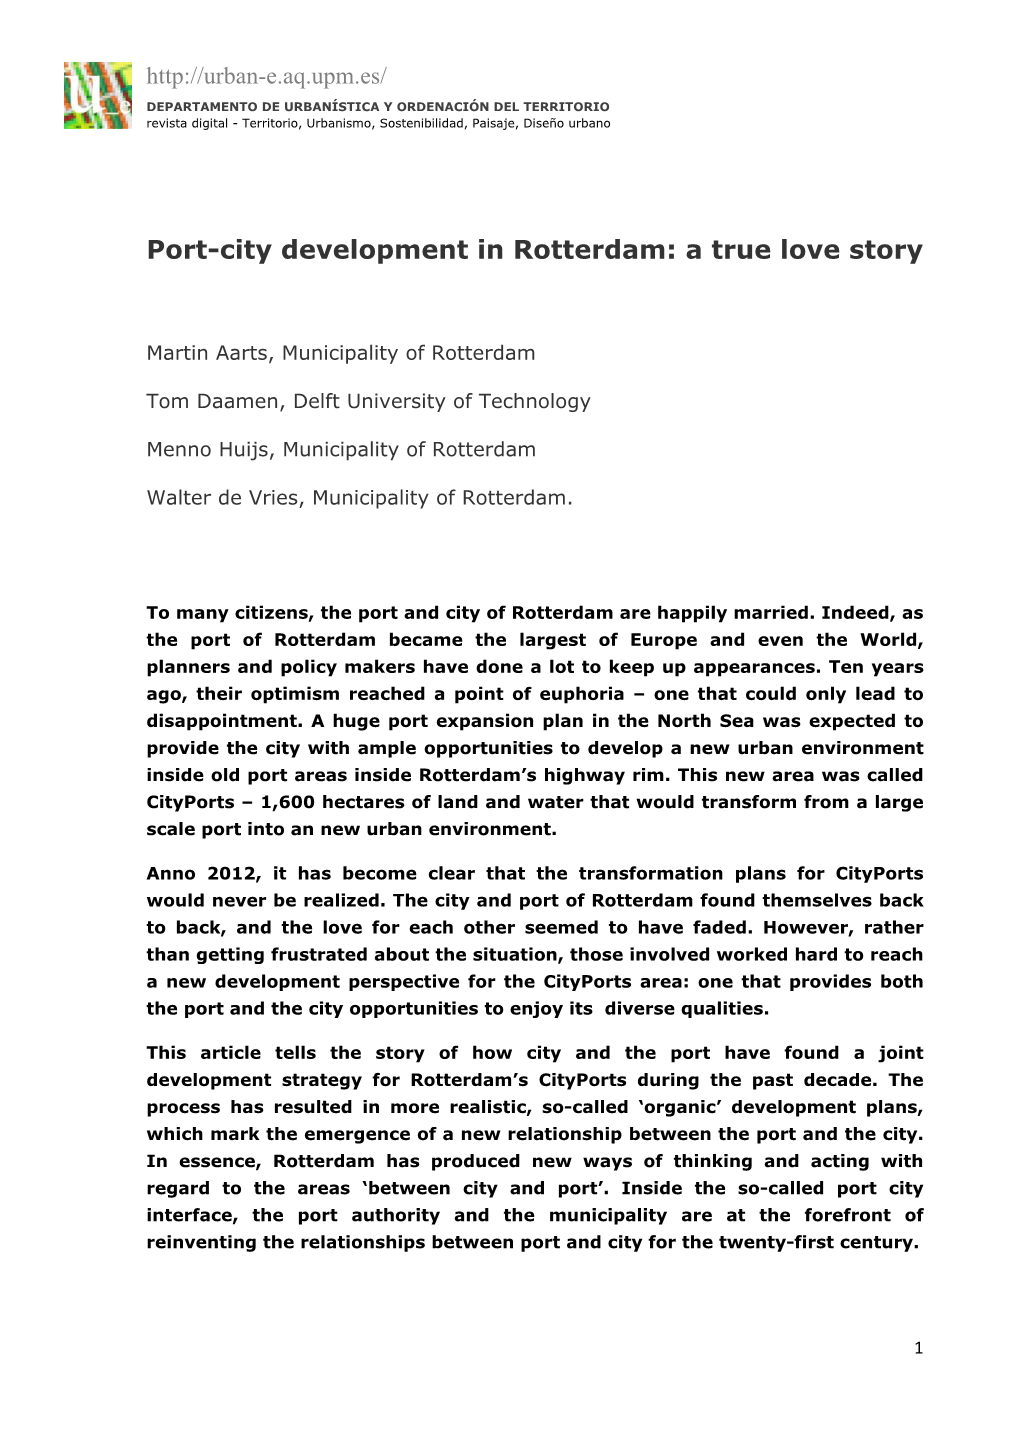 Port-City Development in Rotterdam: a True Love Story